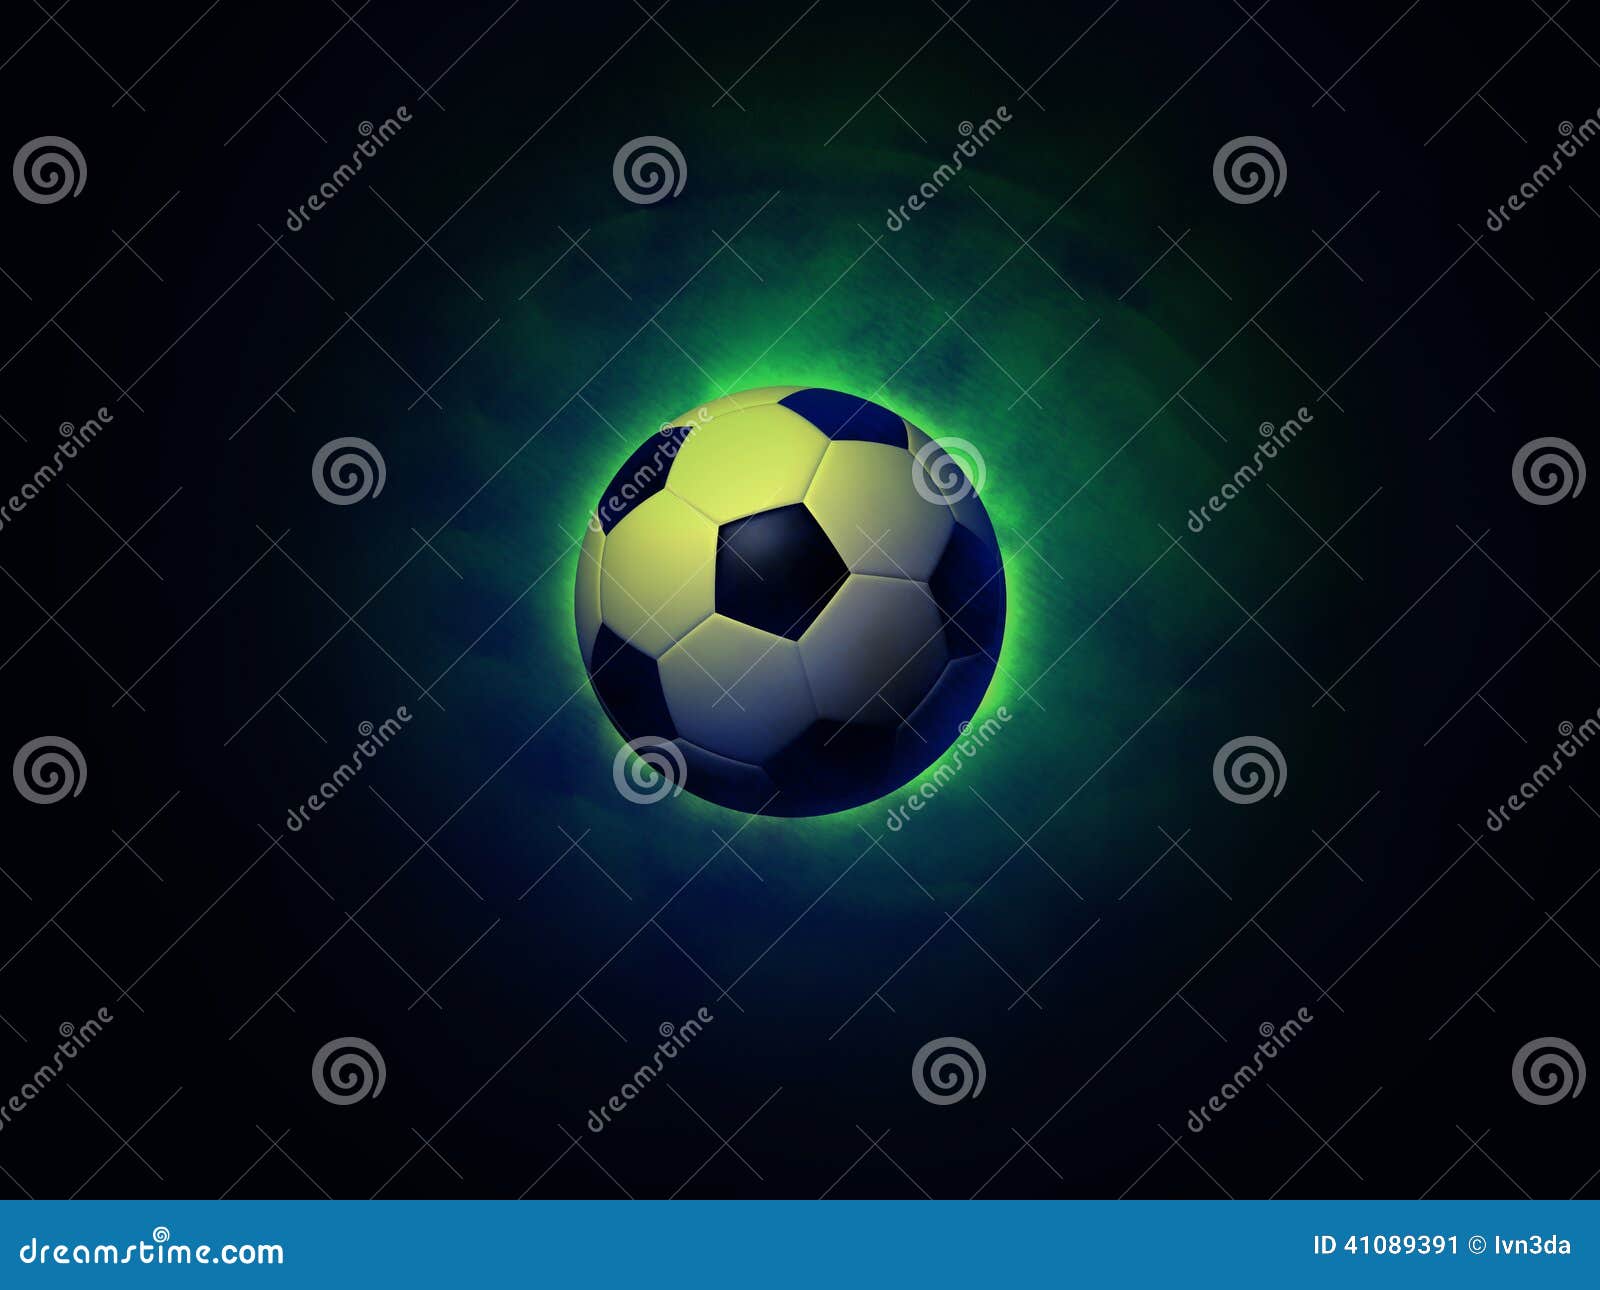 soccer ball vigorously green background